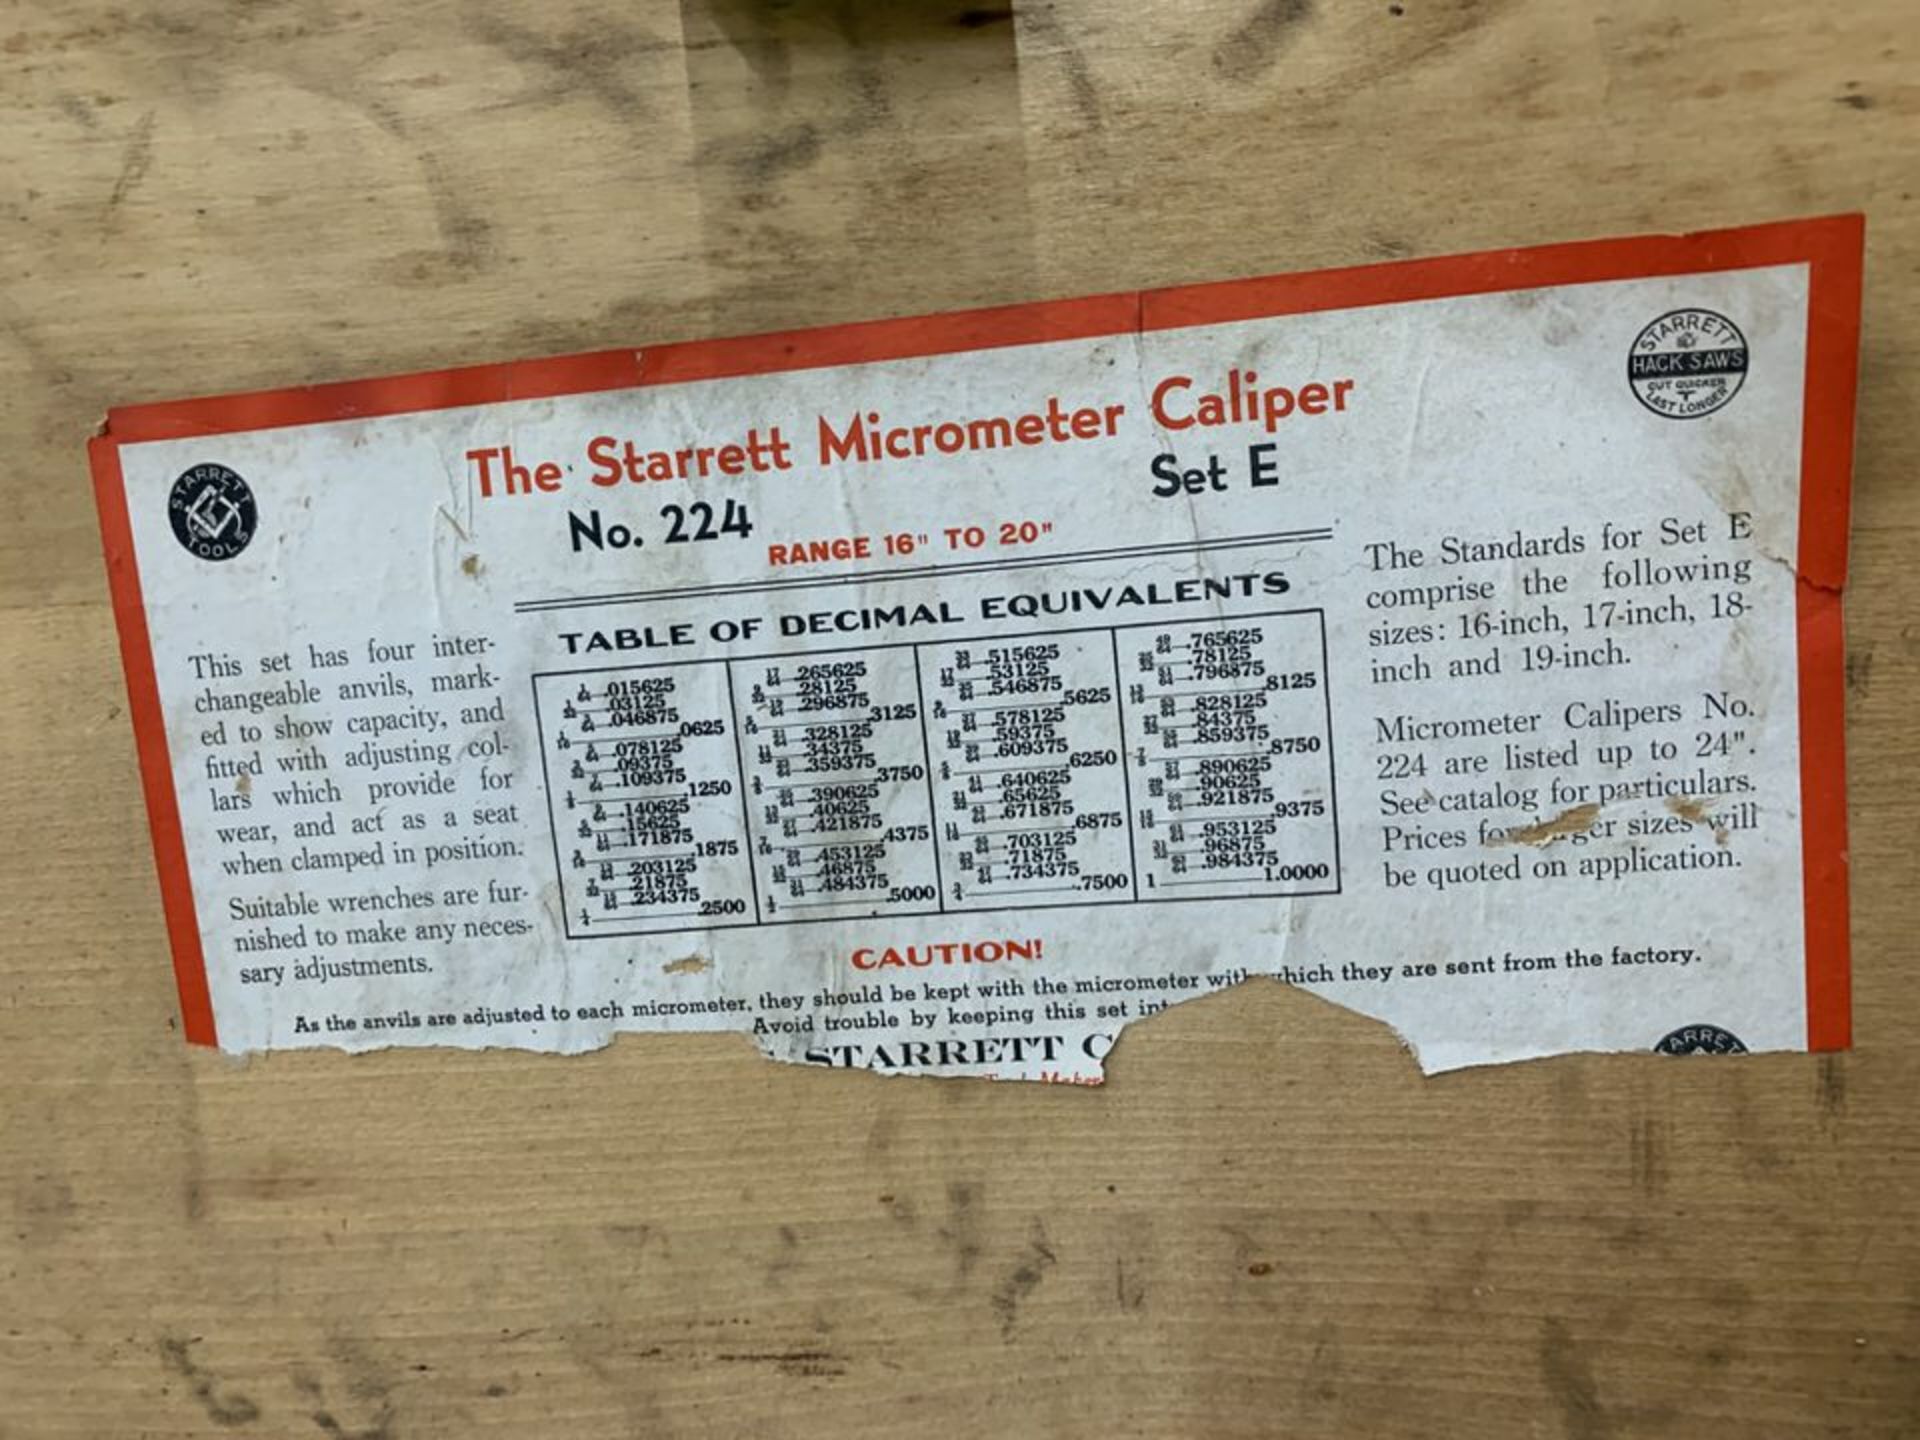 16" - 20" Starrett No. 224 Micrometer Caliper (Set E) - Image 2 of 3